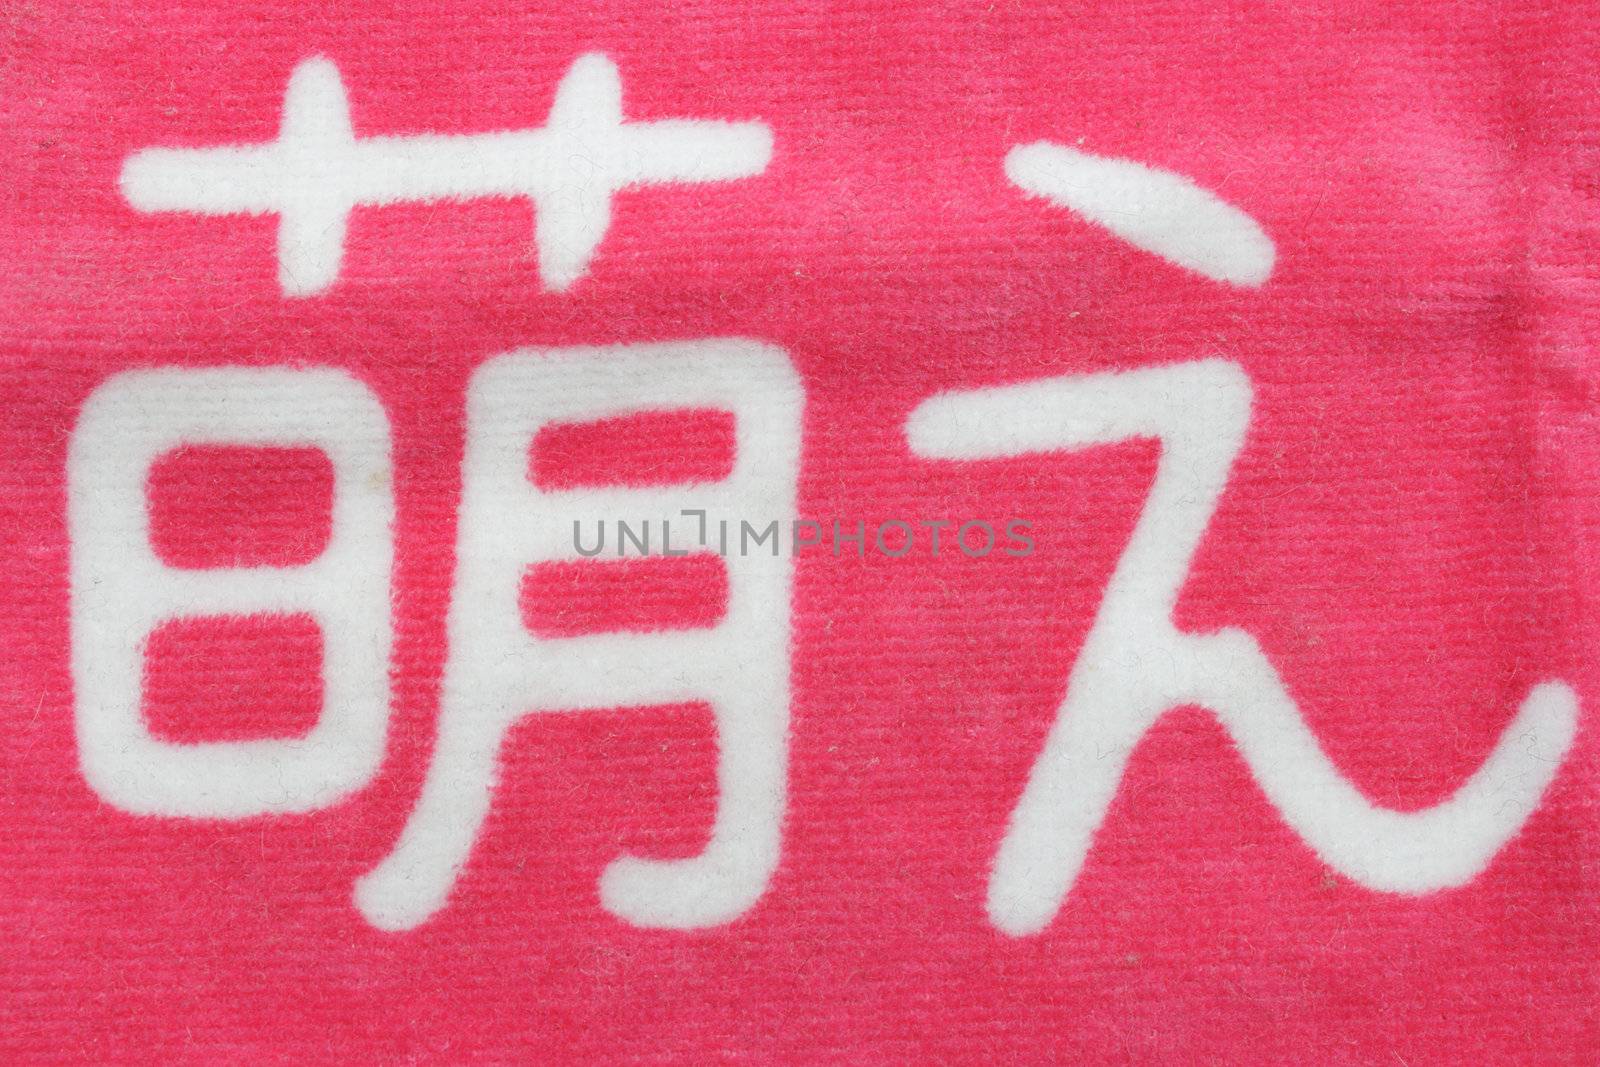 White kanji moeru on the pink cloth